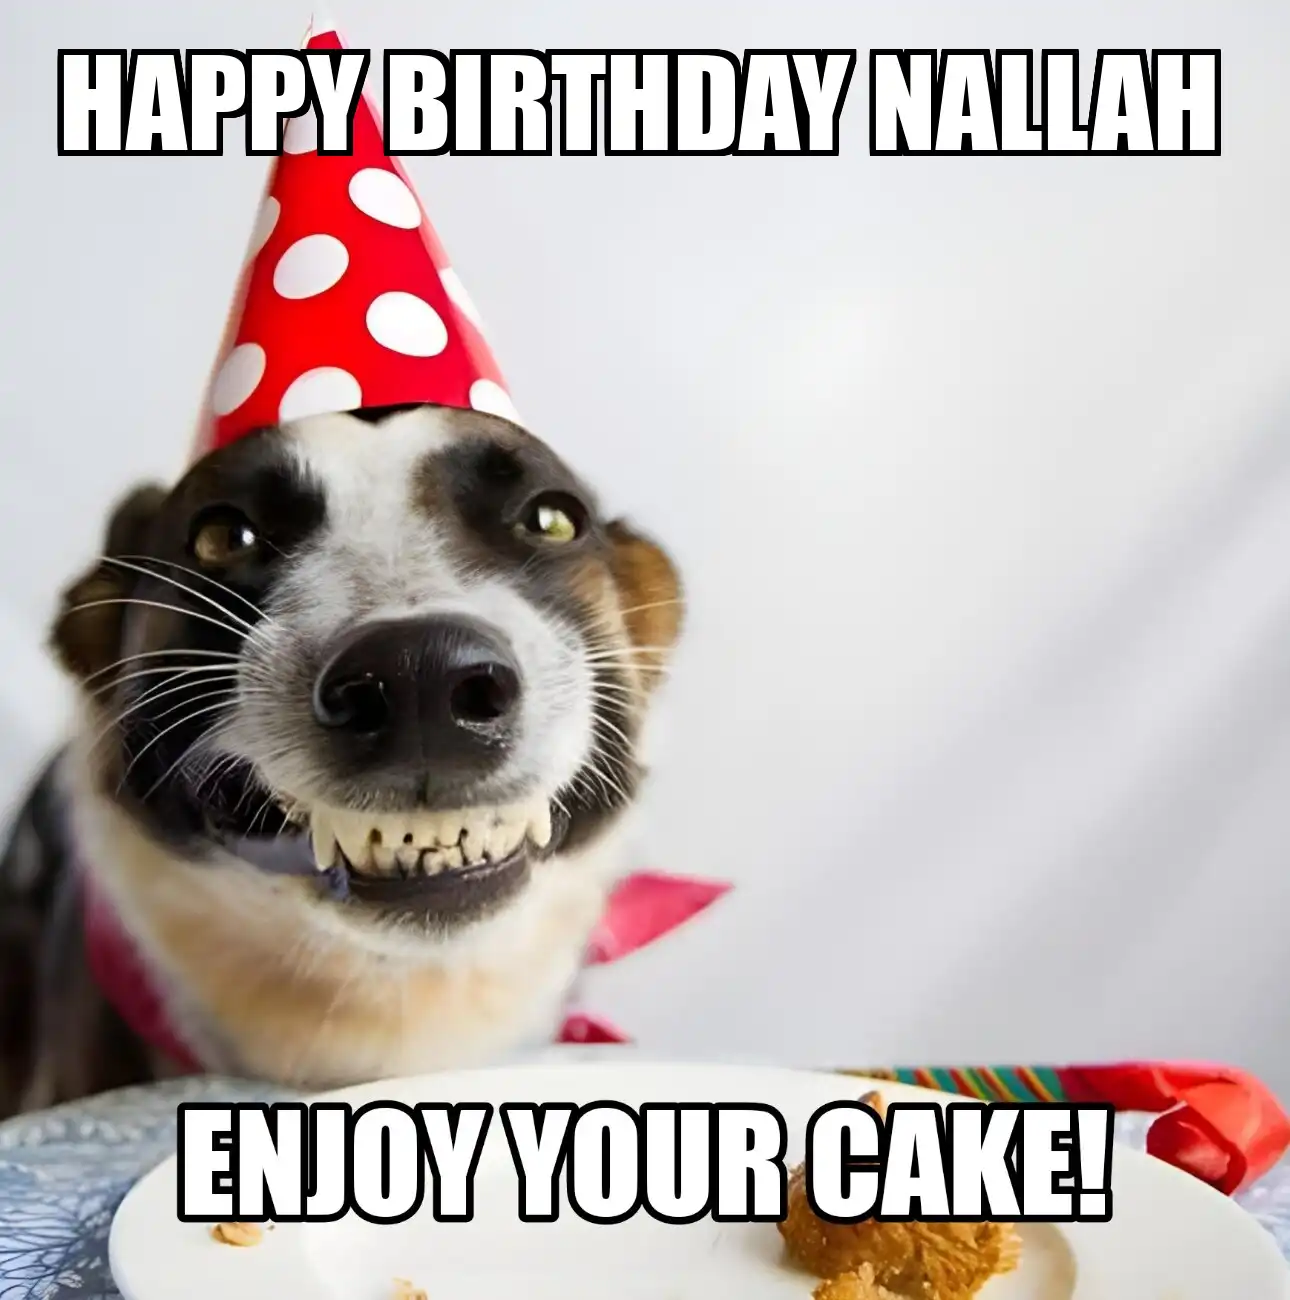 Happy Birthday Nallah Enjoy Your Cake Dog Meme